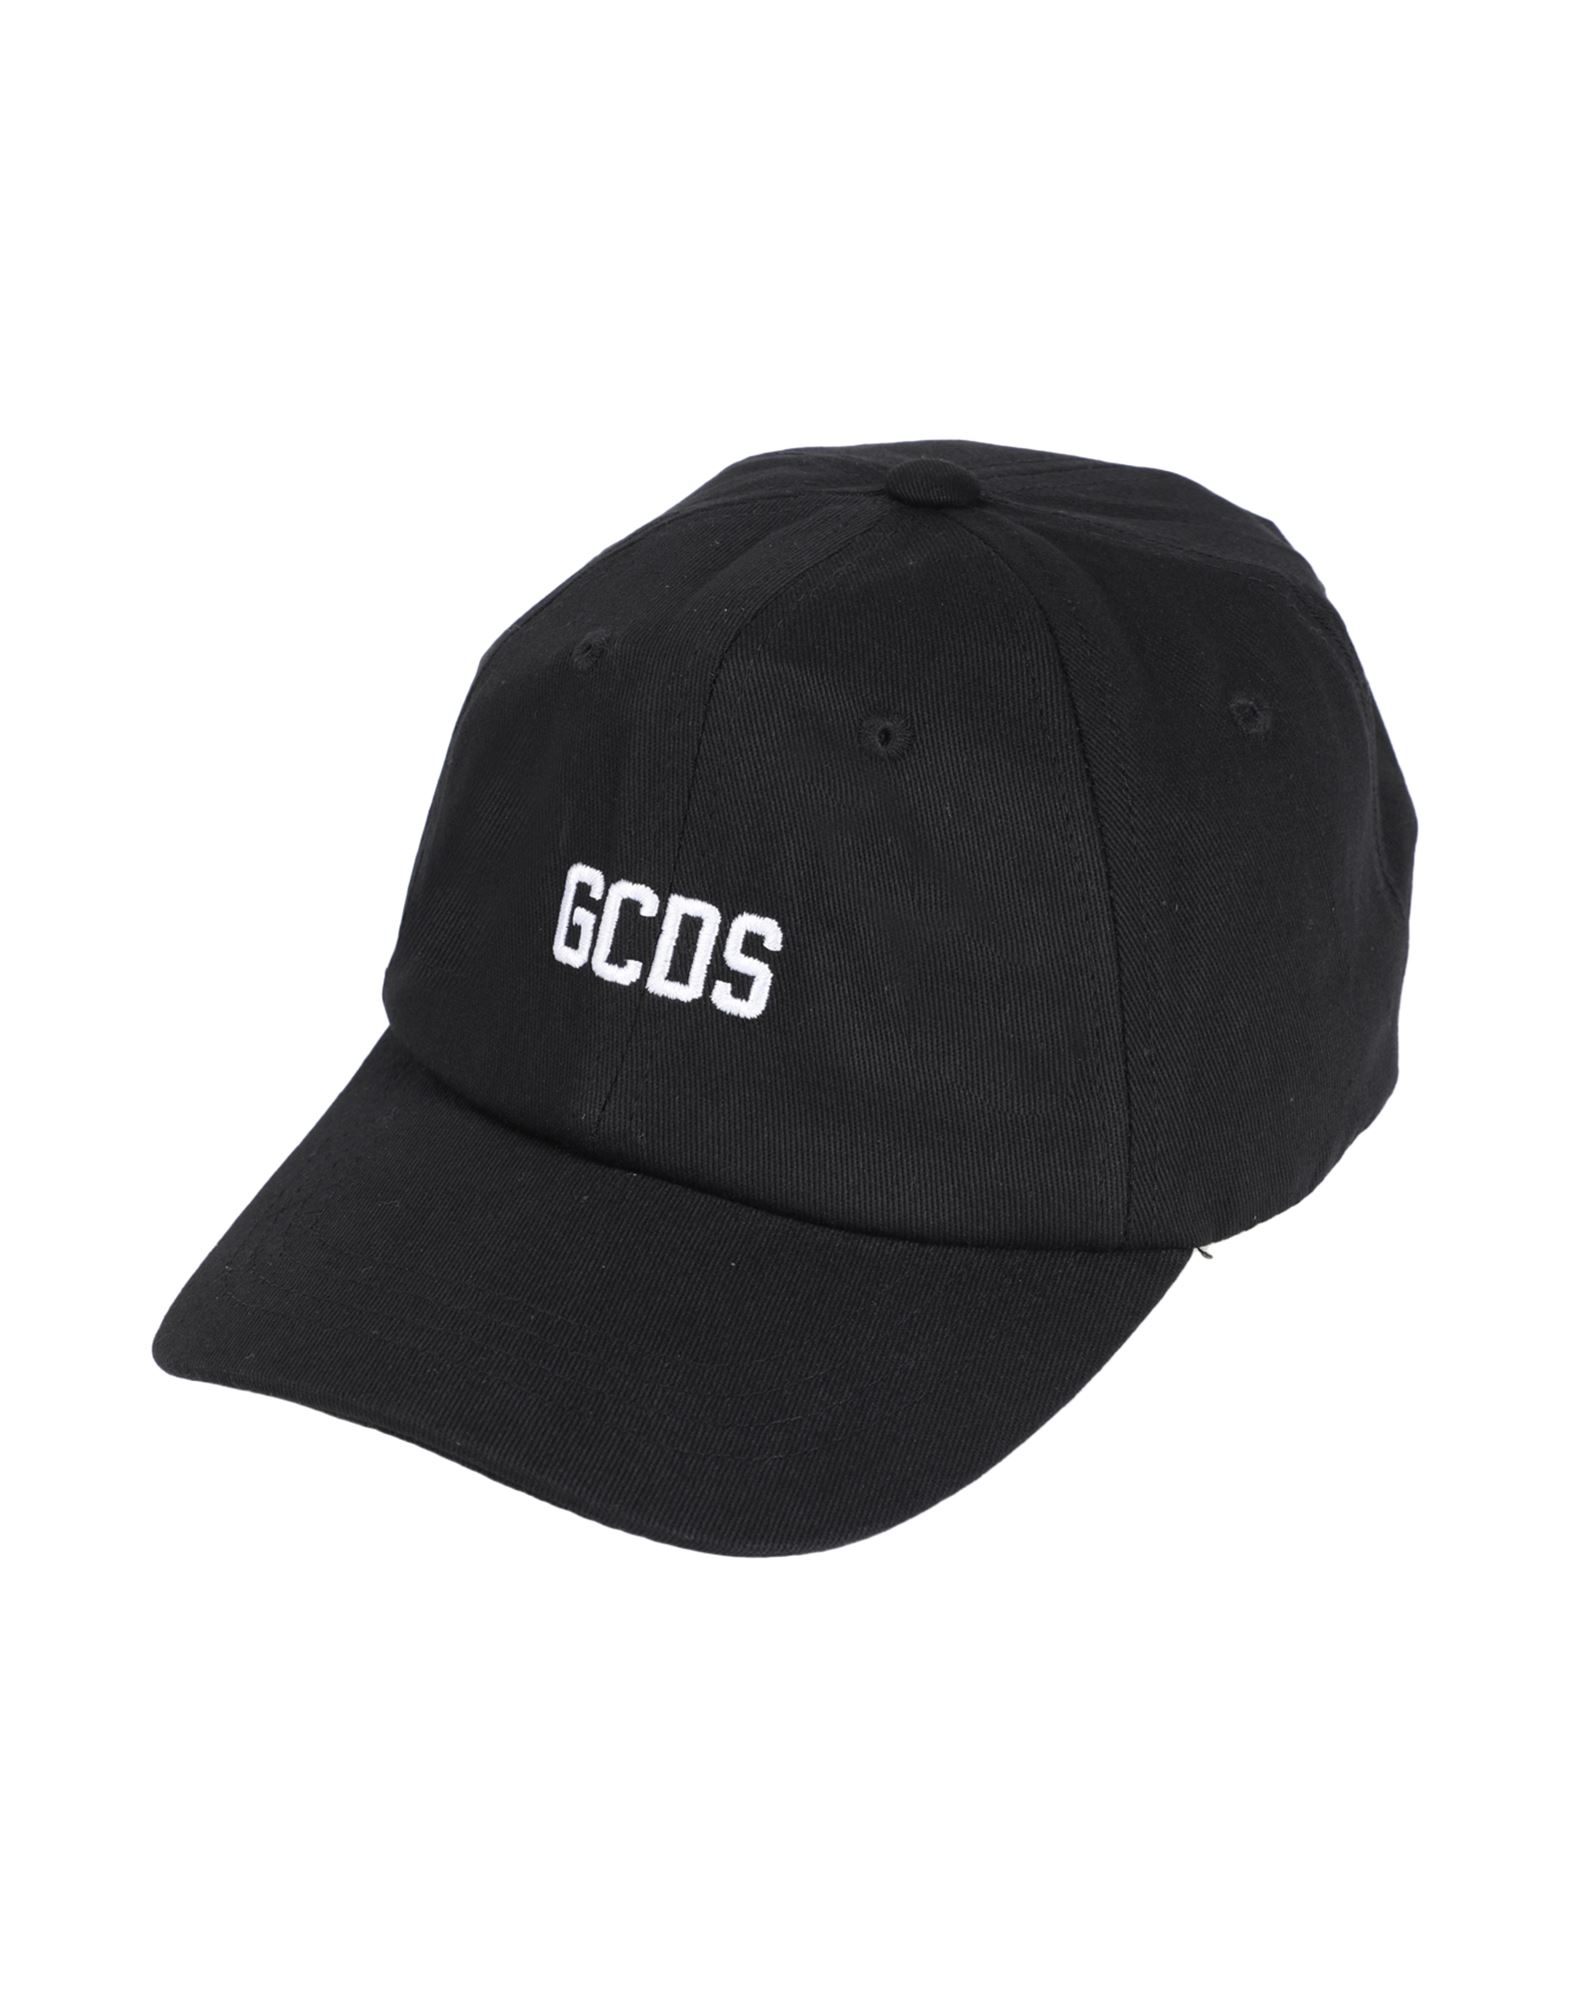 GCDS GCDS HAT BLACK SIZE ONESIZE COTTON